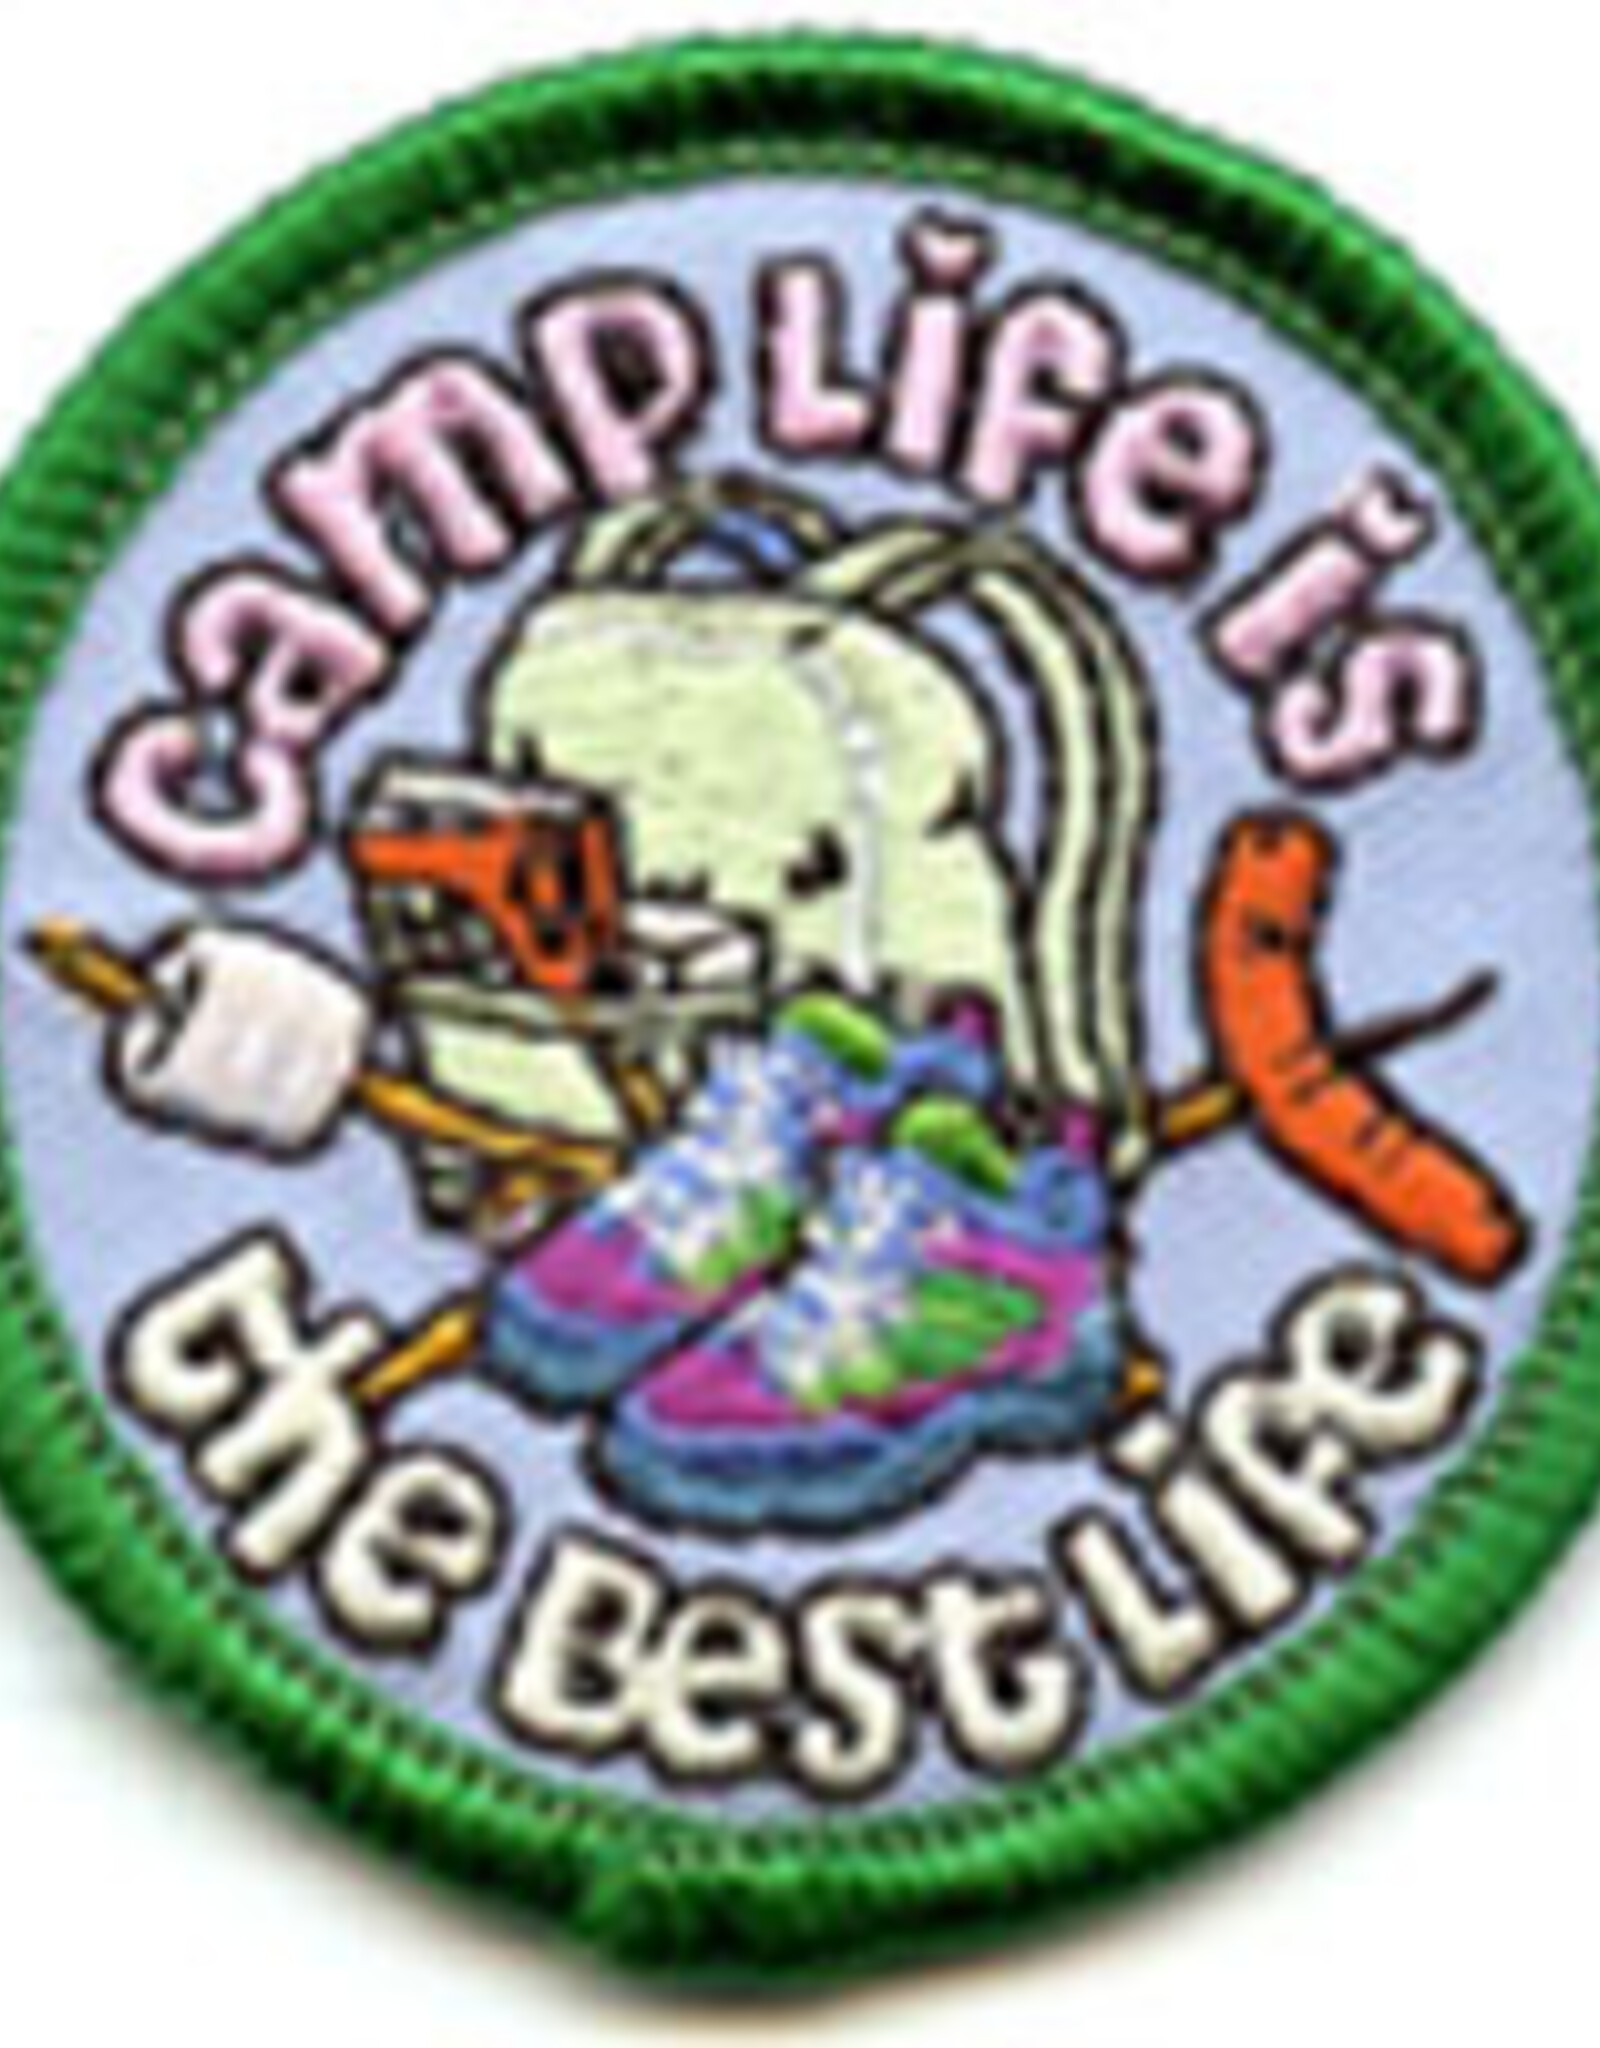 Advantage Emblem & Screen Prnt Camp Life is The Best Life Fun Patch